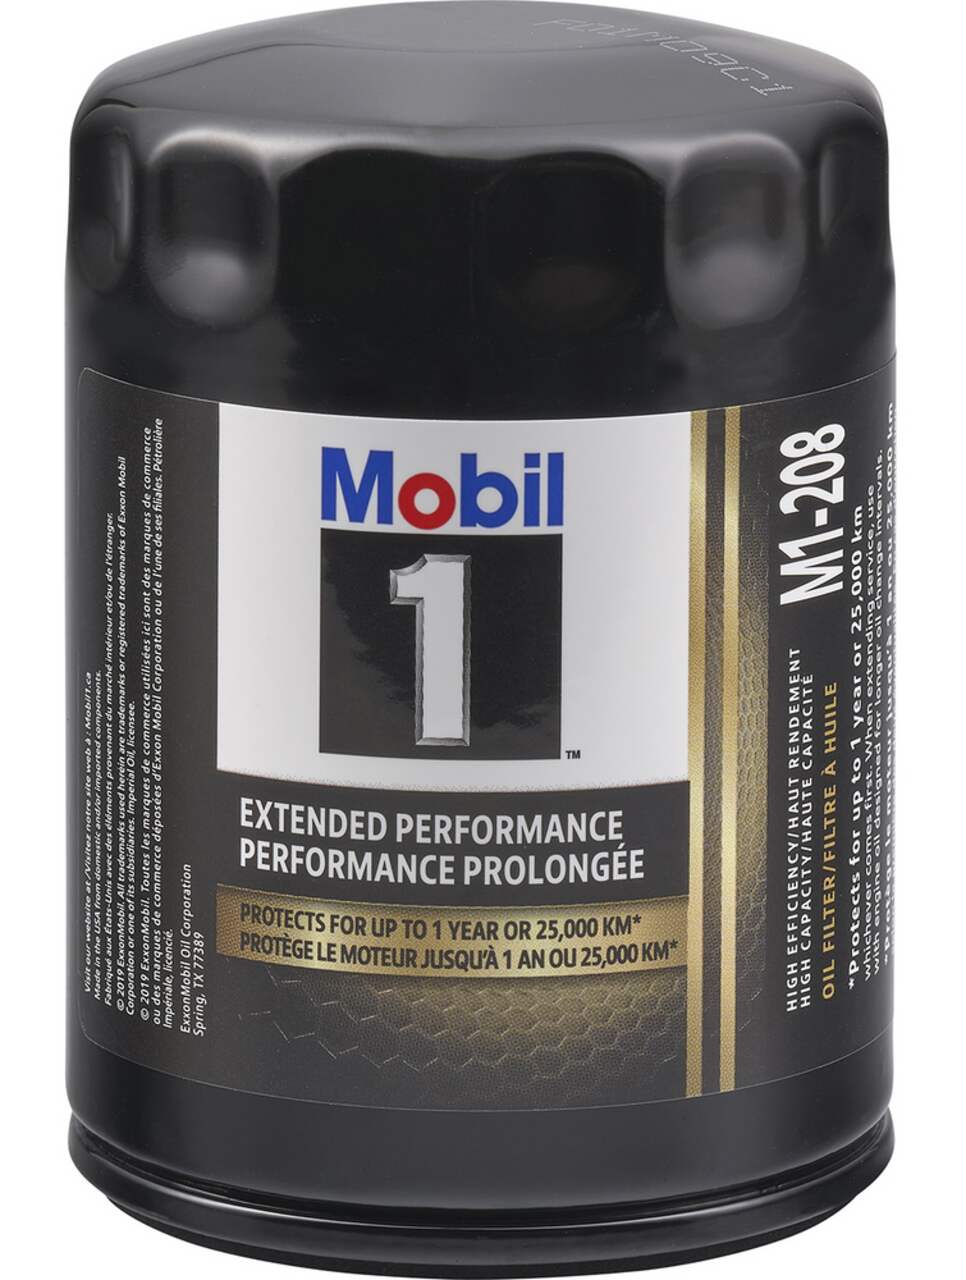 Filtre à huile Mobil 1 M1-208 Performance prolongée